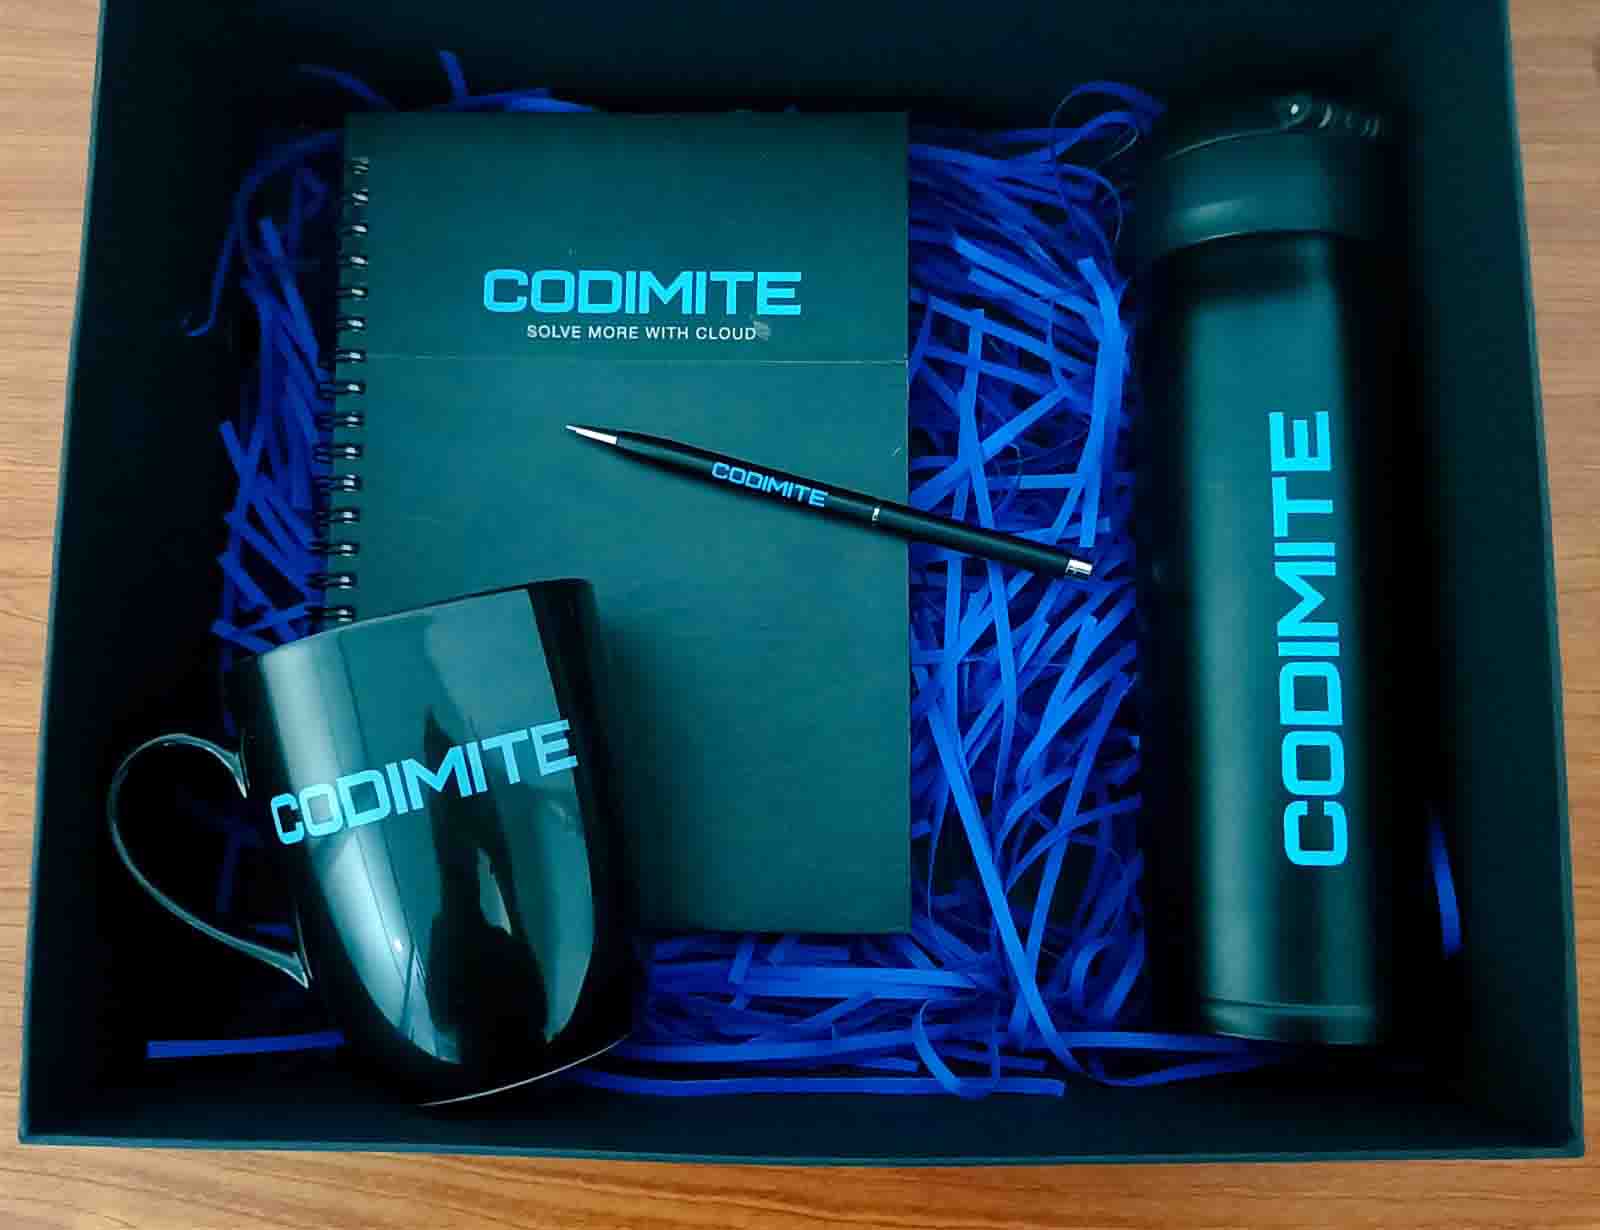 CODIMITE’s Corporate Gifts